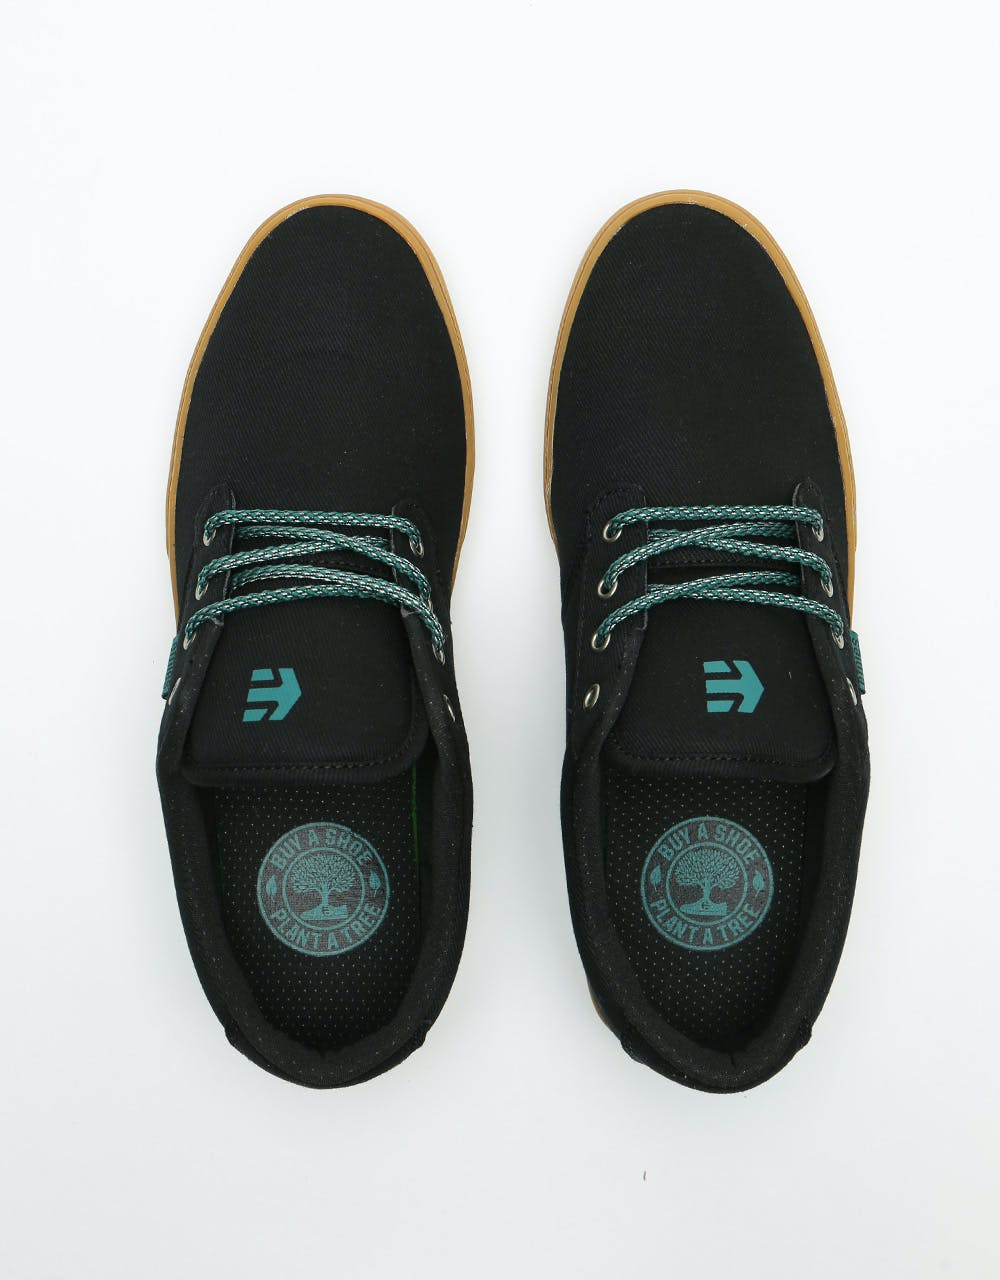 Etnies Jameson Preserve Skate Shoes - Black/Green/Gum